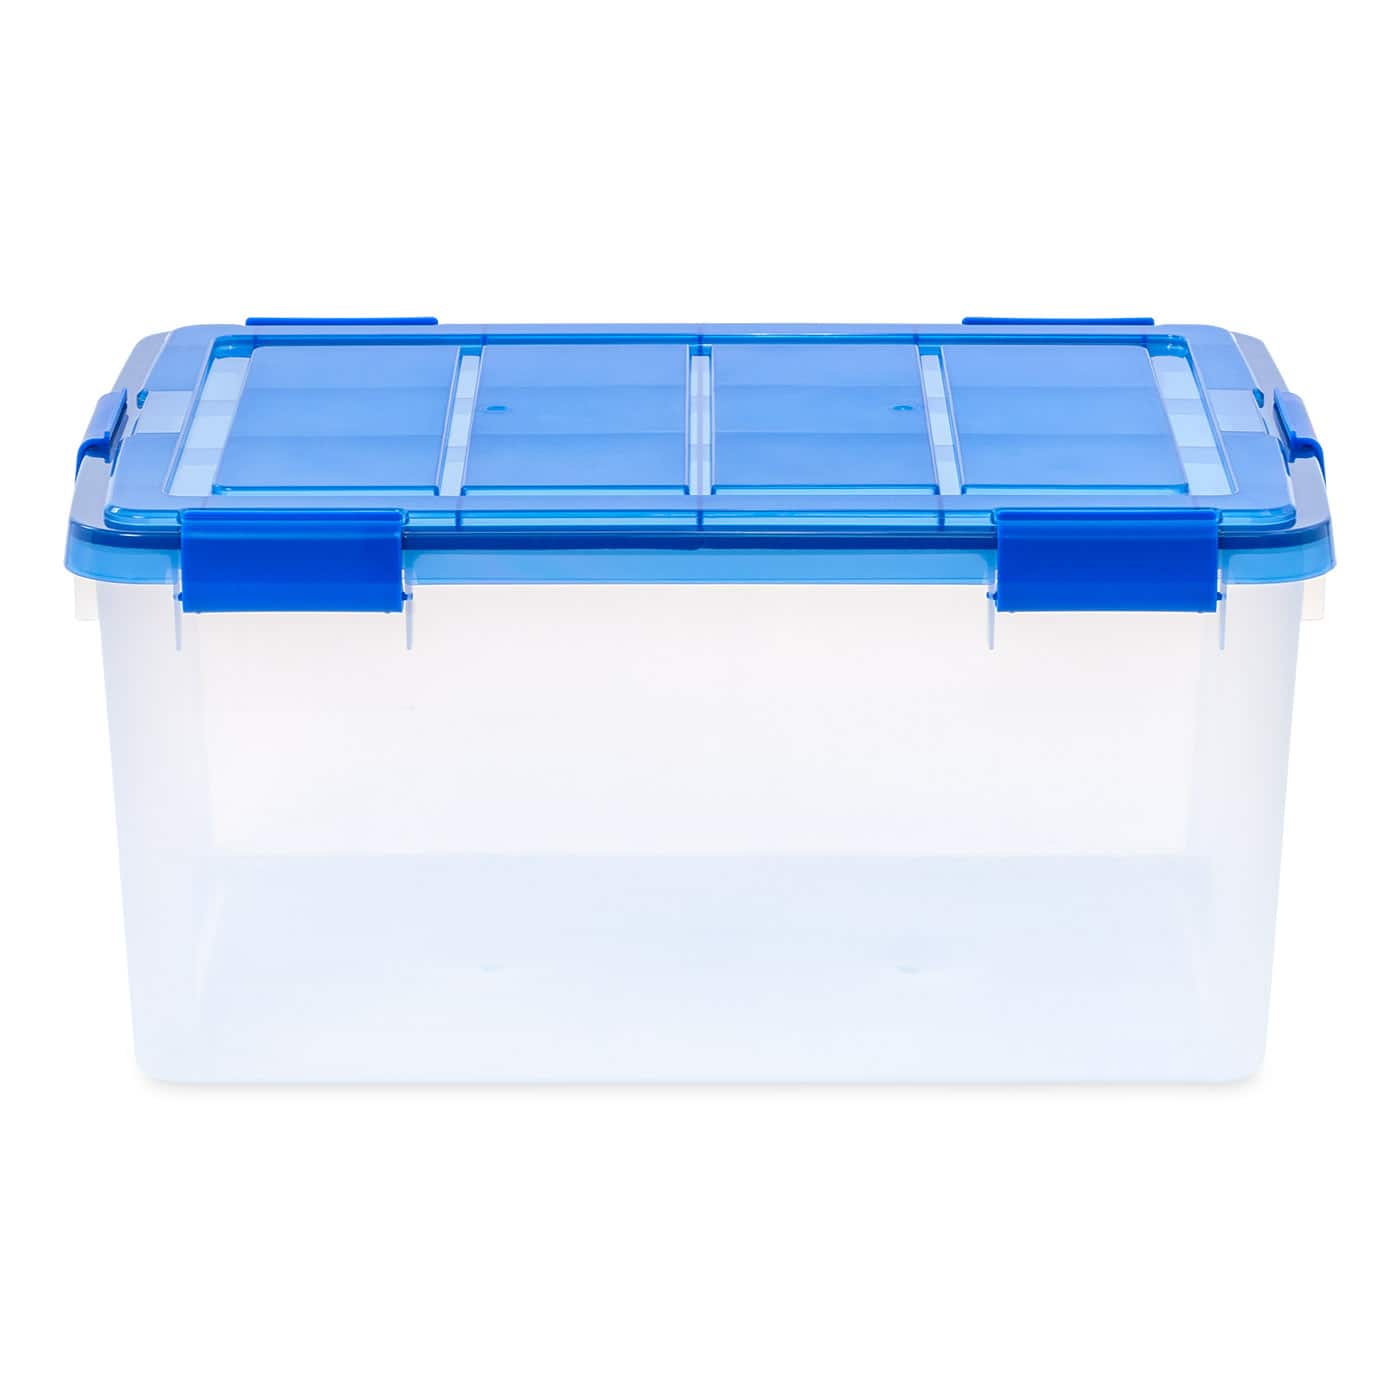 Iris 26.5 Qt. Clear Plastic Storage Boxes in Blue Lid